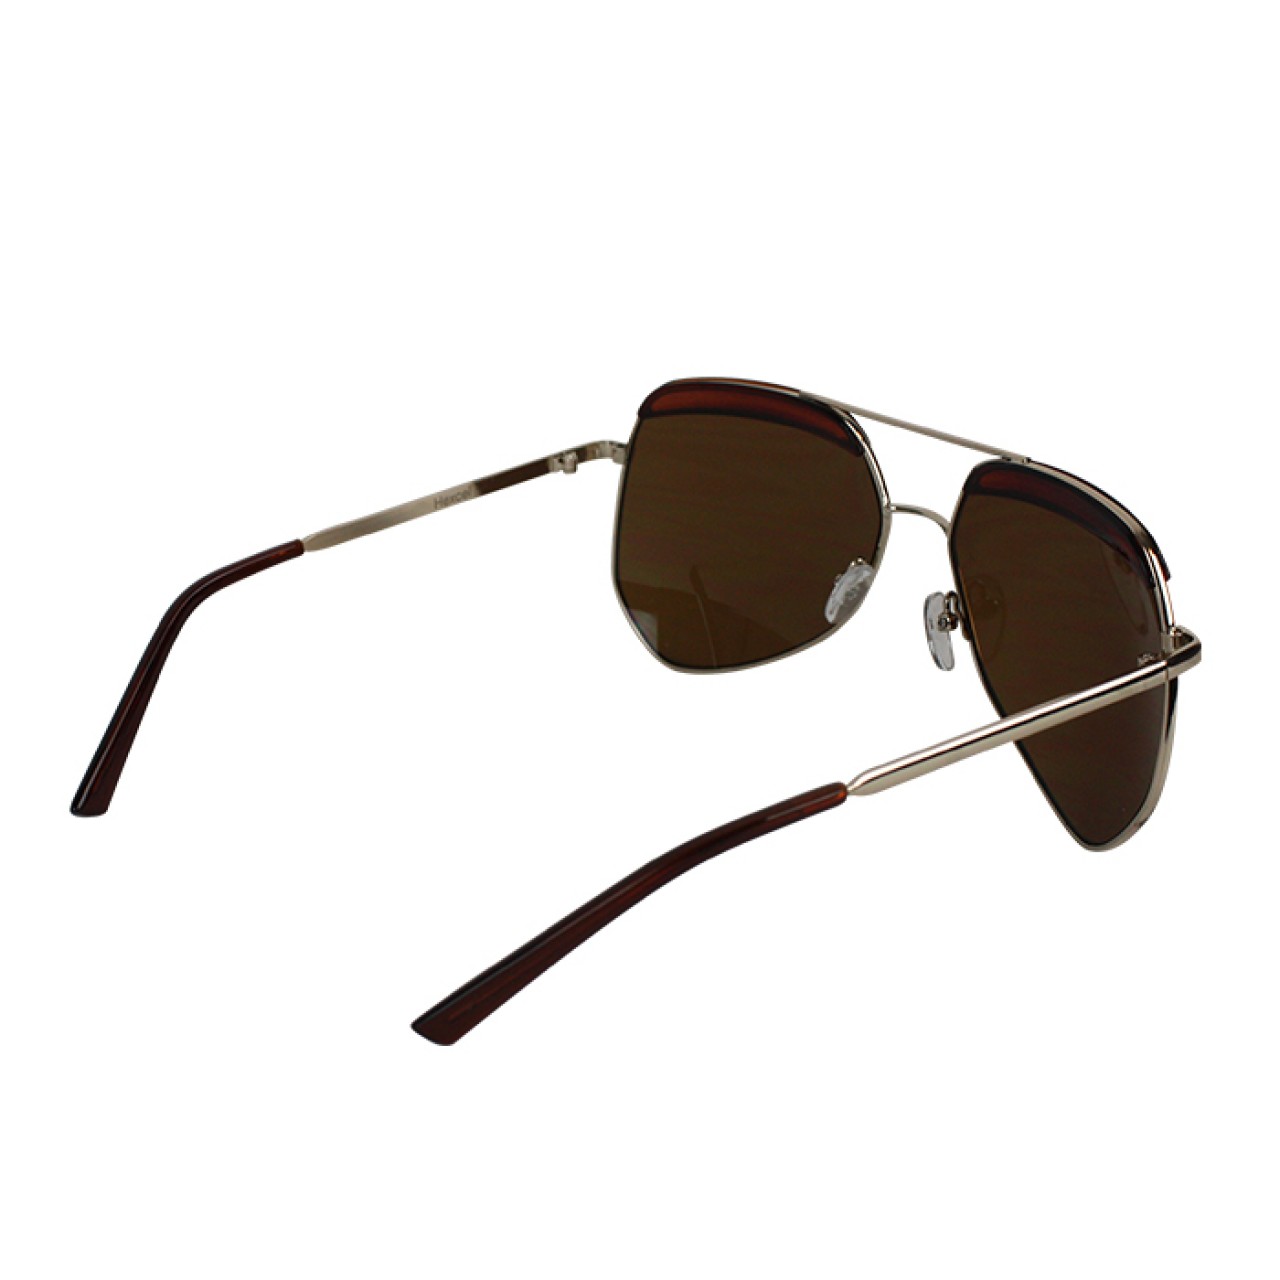 Men's UV Protected Aviator Redwood texture Sunglasses